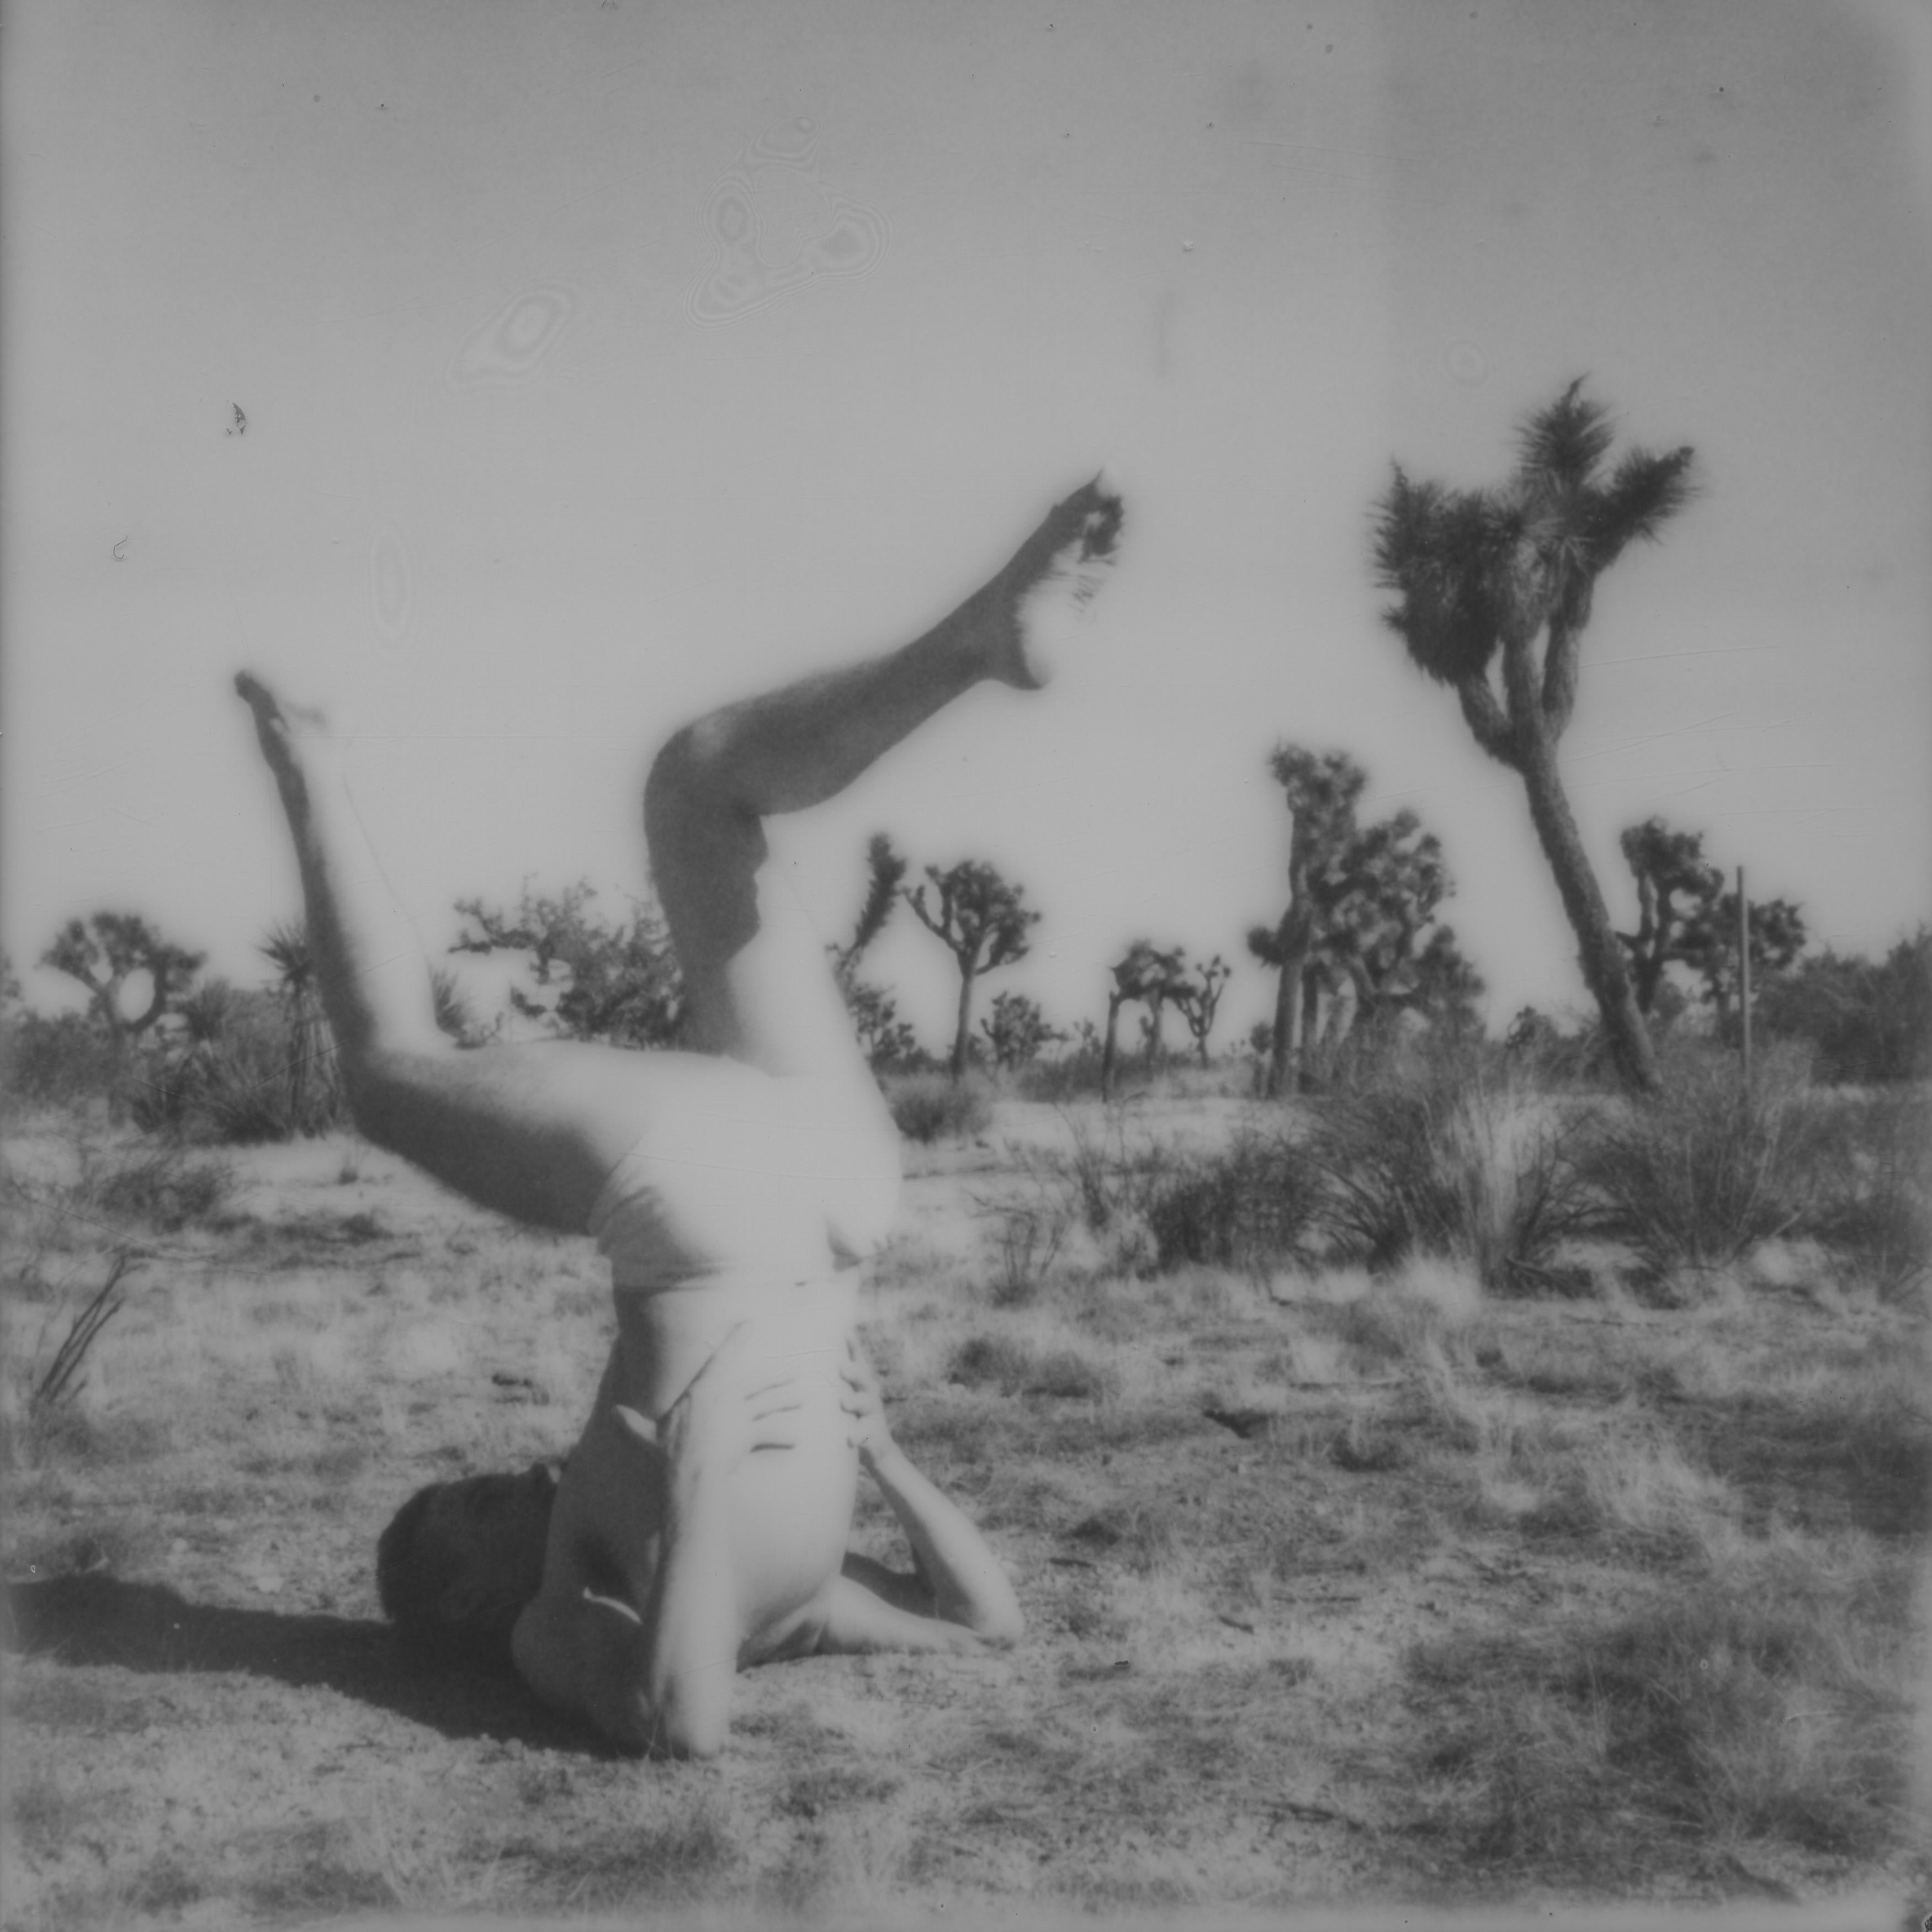 Rain Dance - Contemporary, Polaroid, Nude, 21st Century, Joshua Tree